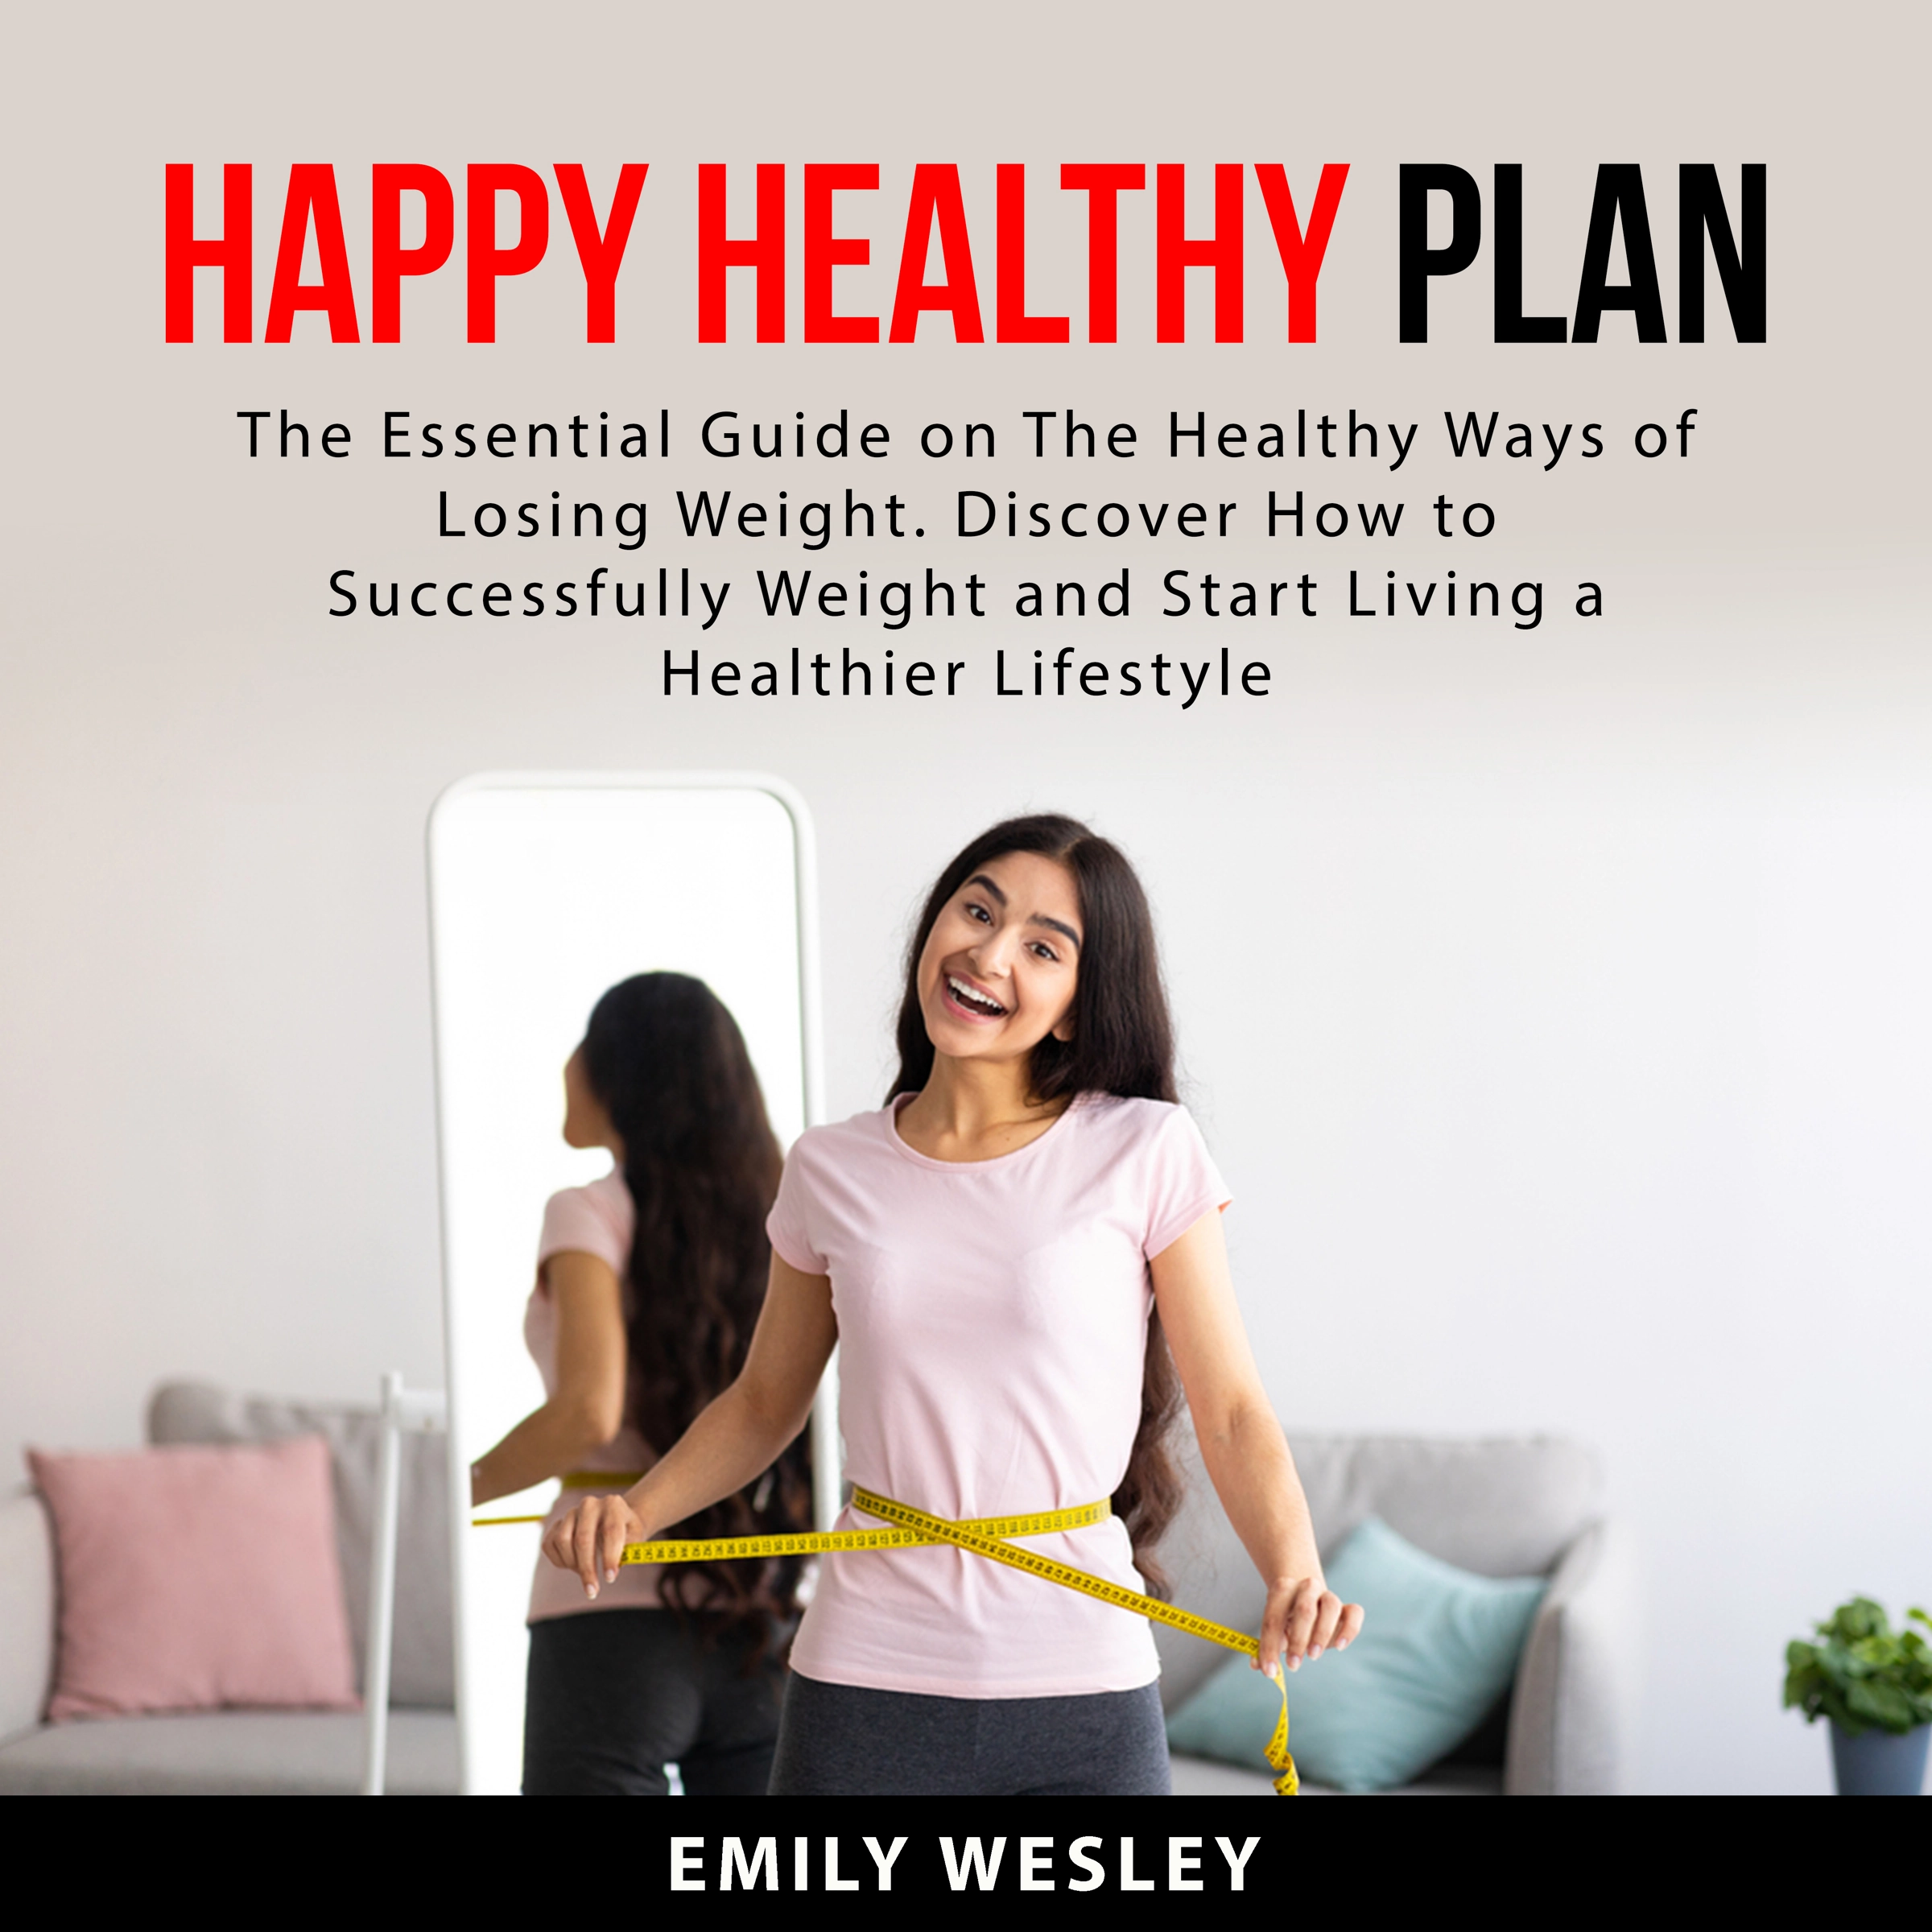 Happy Healthy Plan Audiobook by Emily Wesley